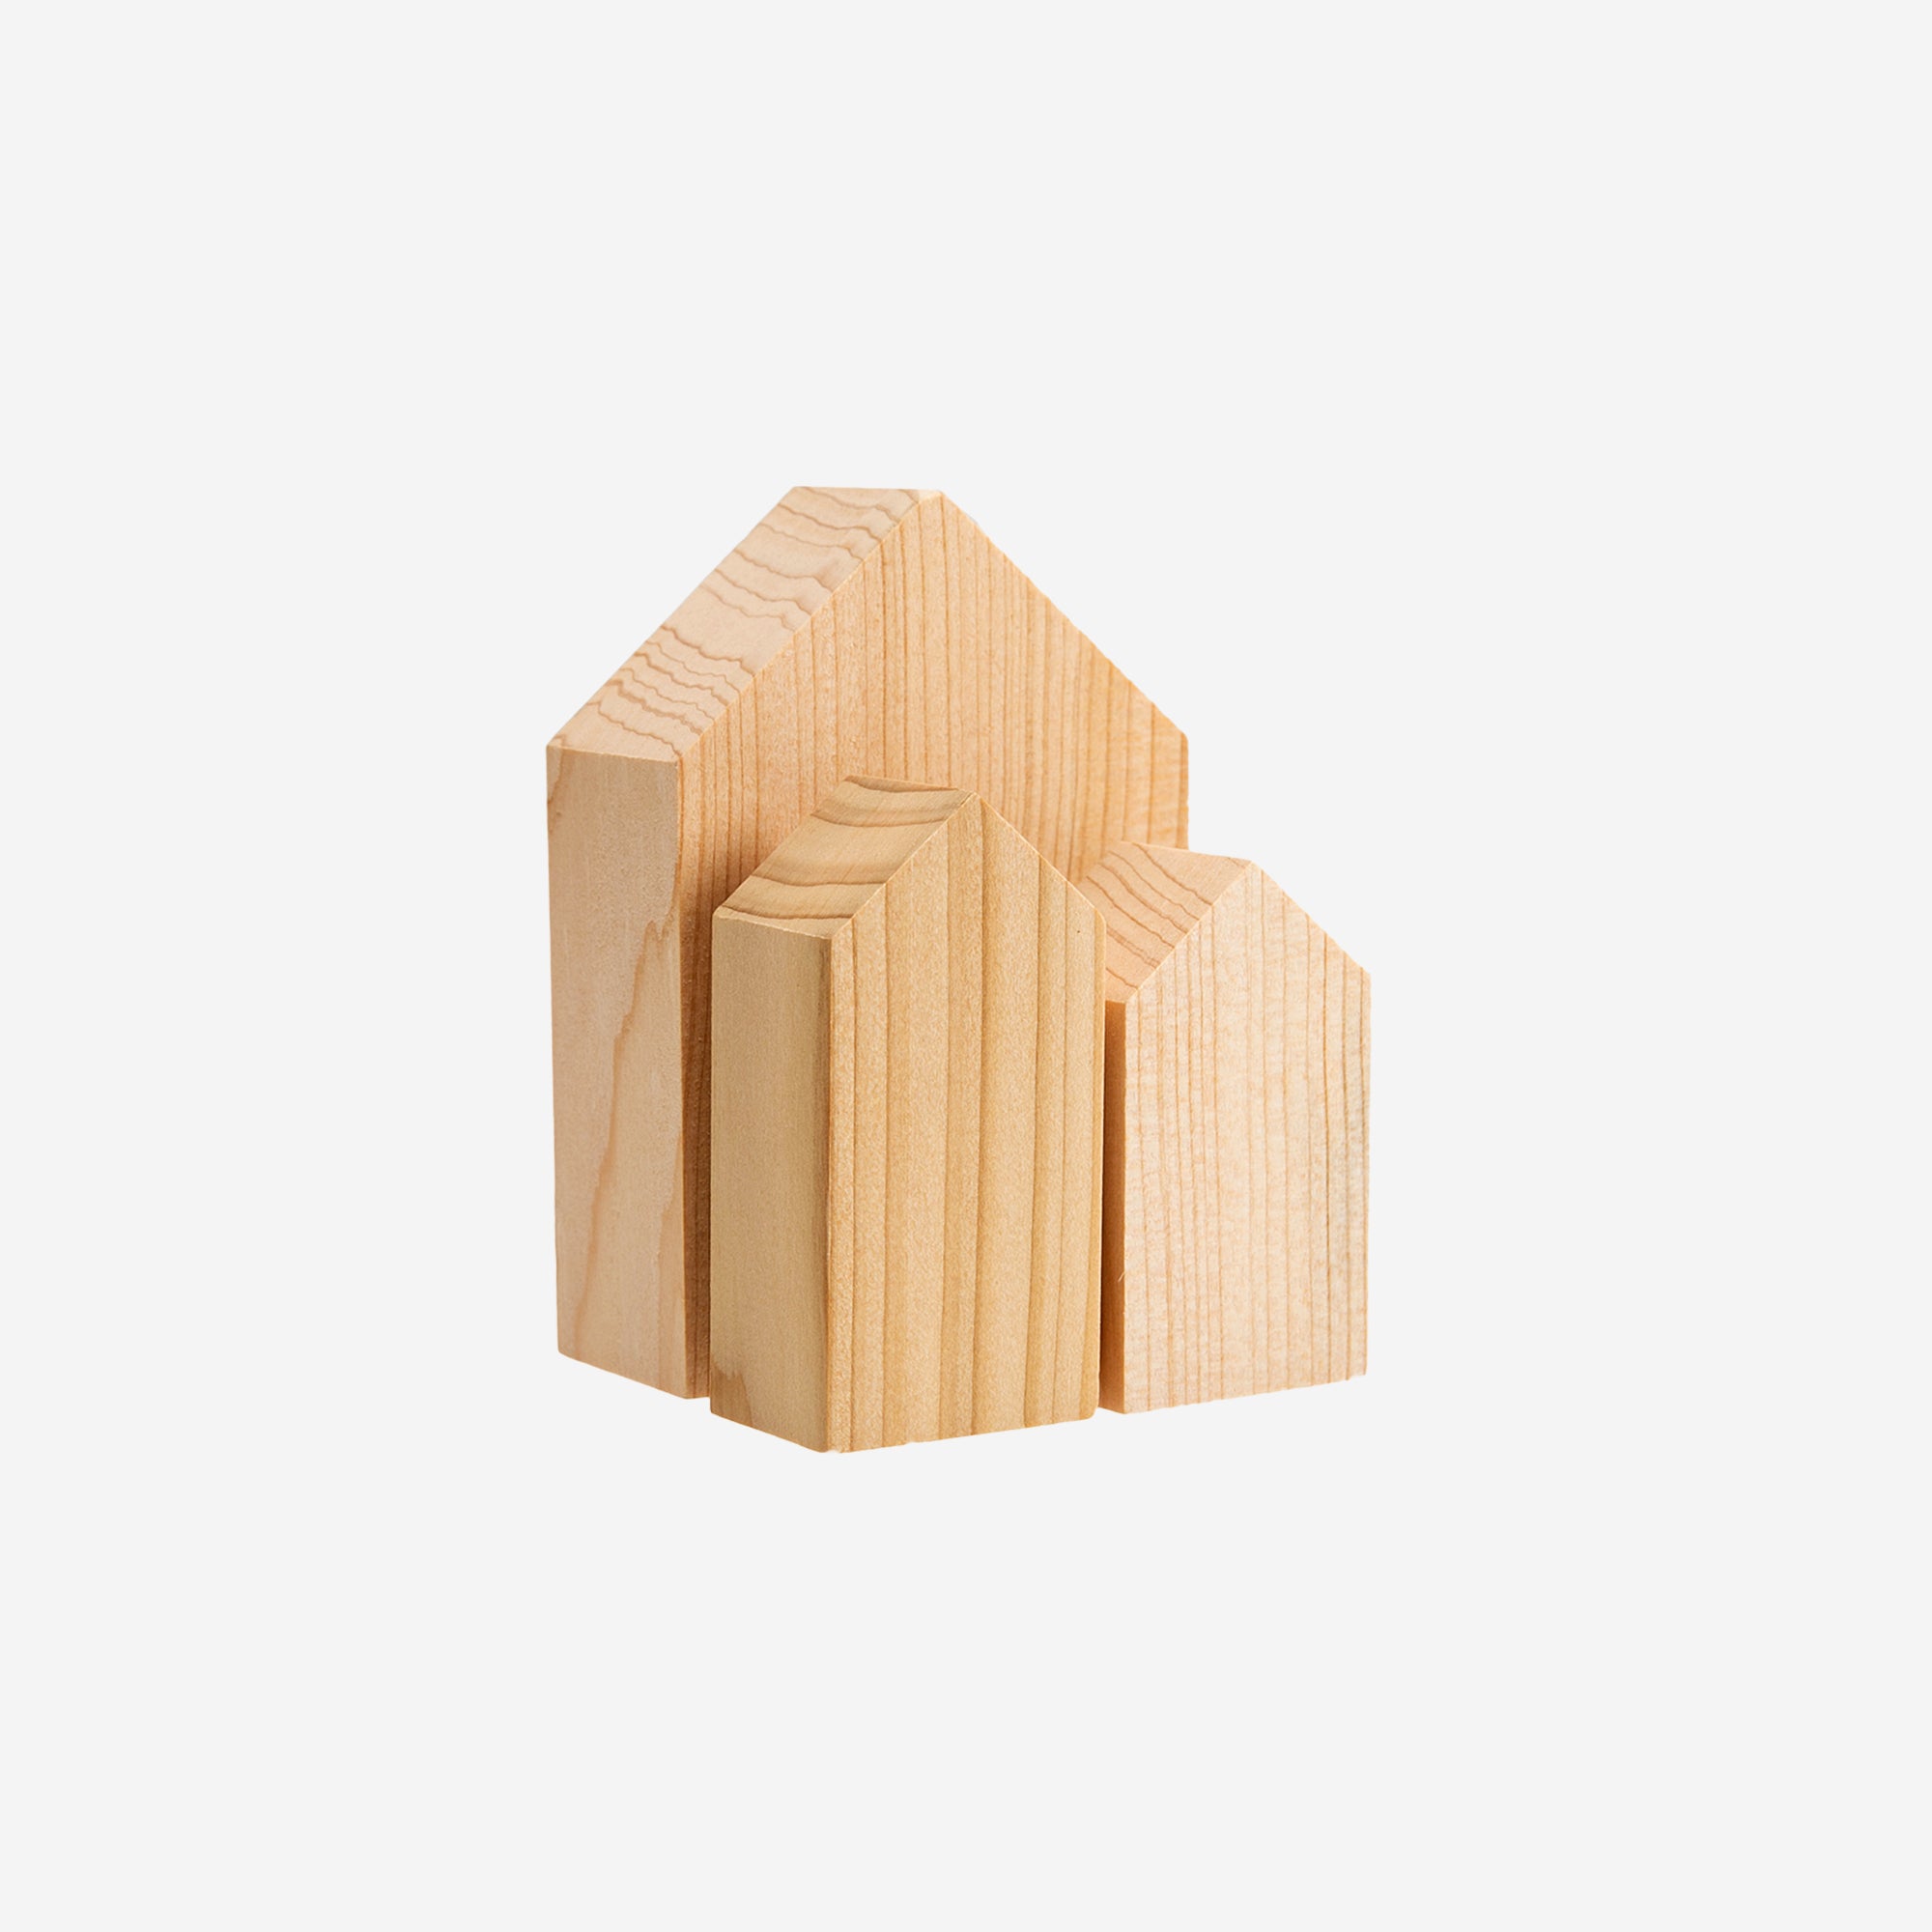 Natural cedar wood anti-moth houses